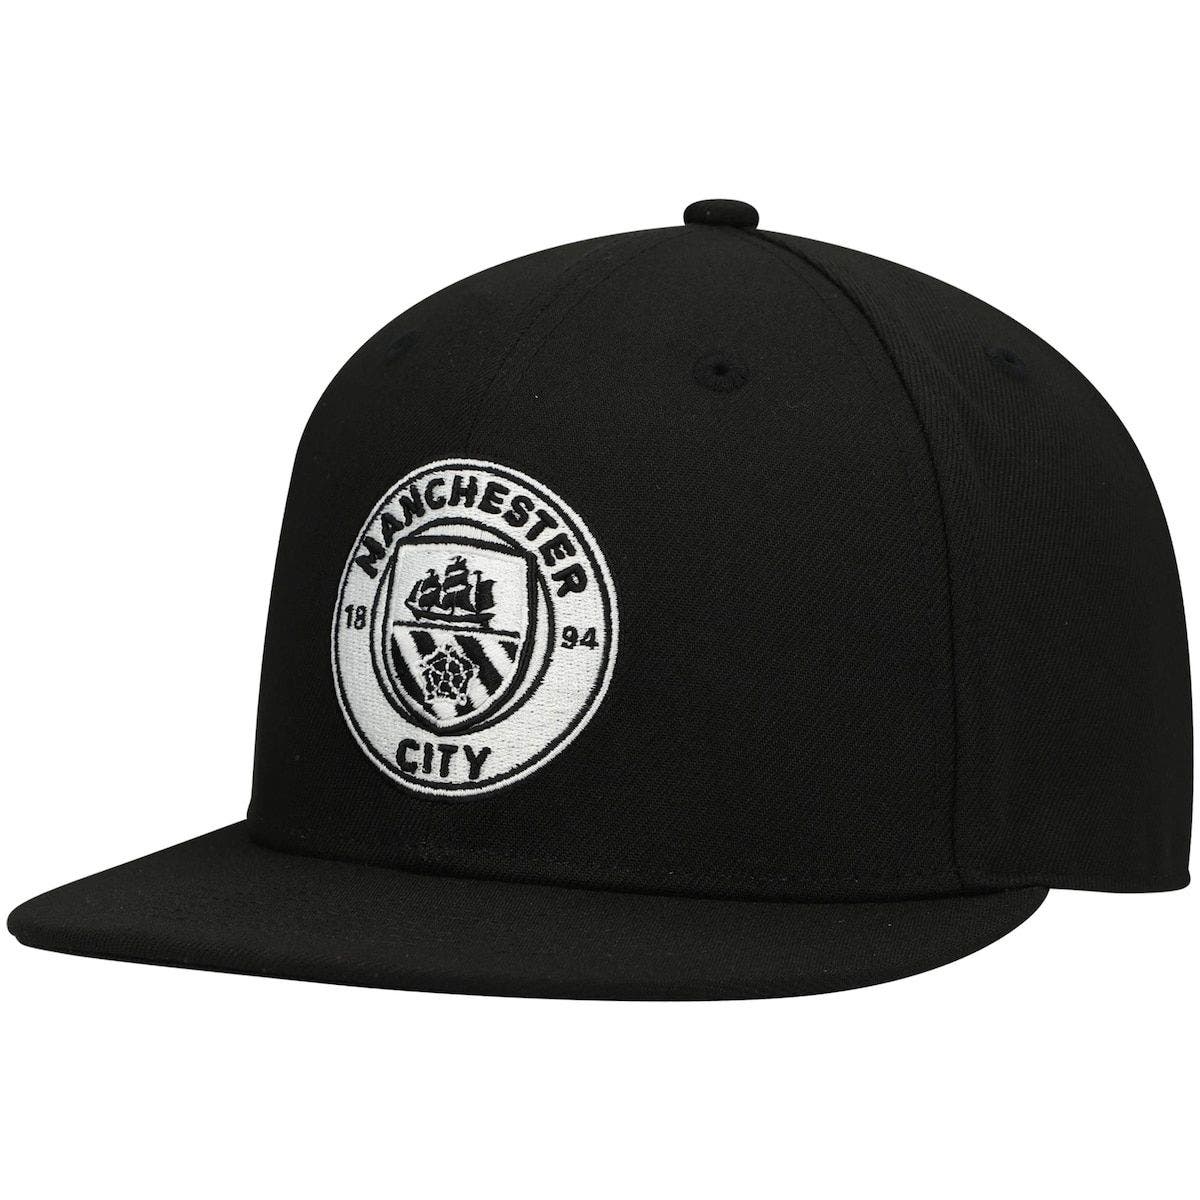 Black One Size Fan Ink Manchester City Hit Snapback Hat